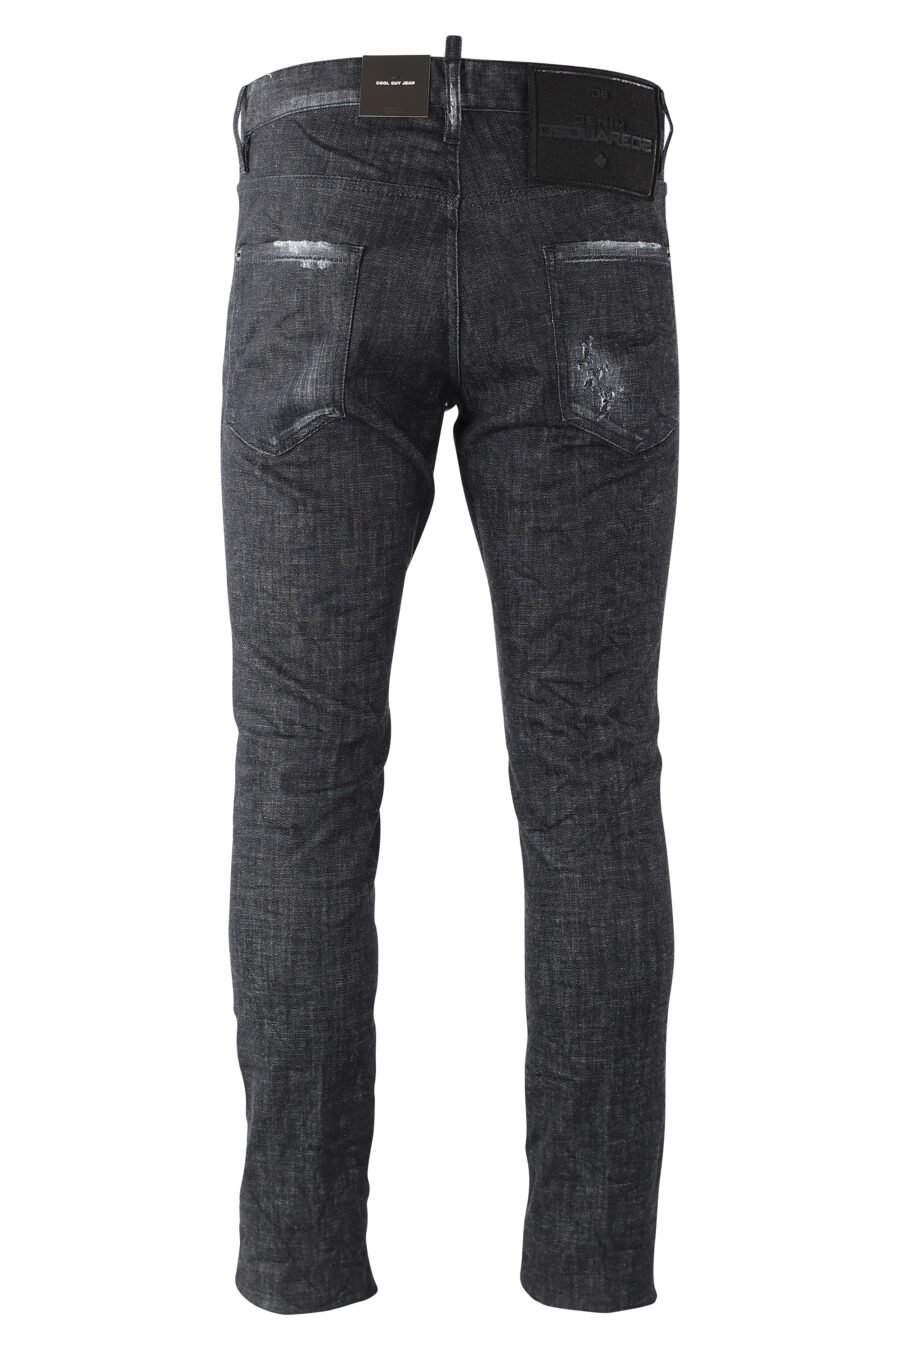 Pantalon en jean noir semi-usé - IMG 9701